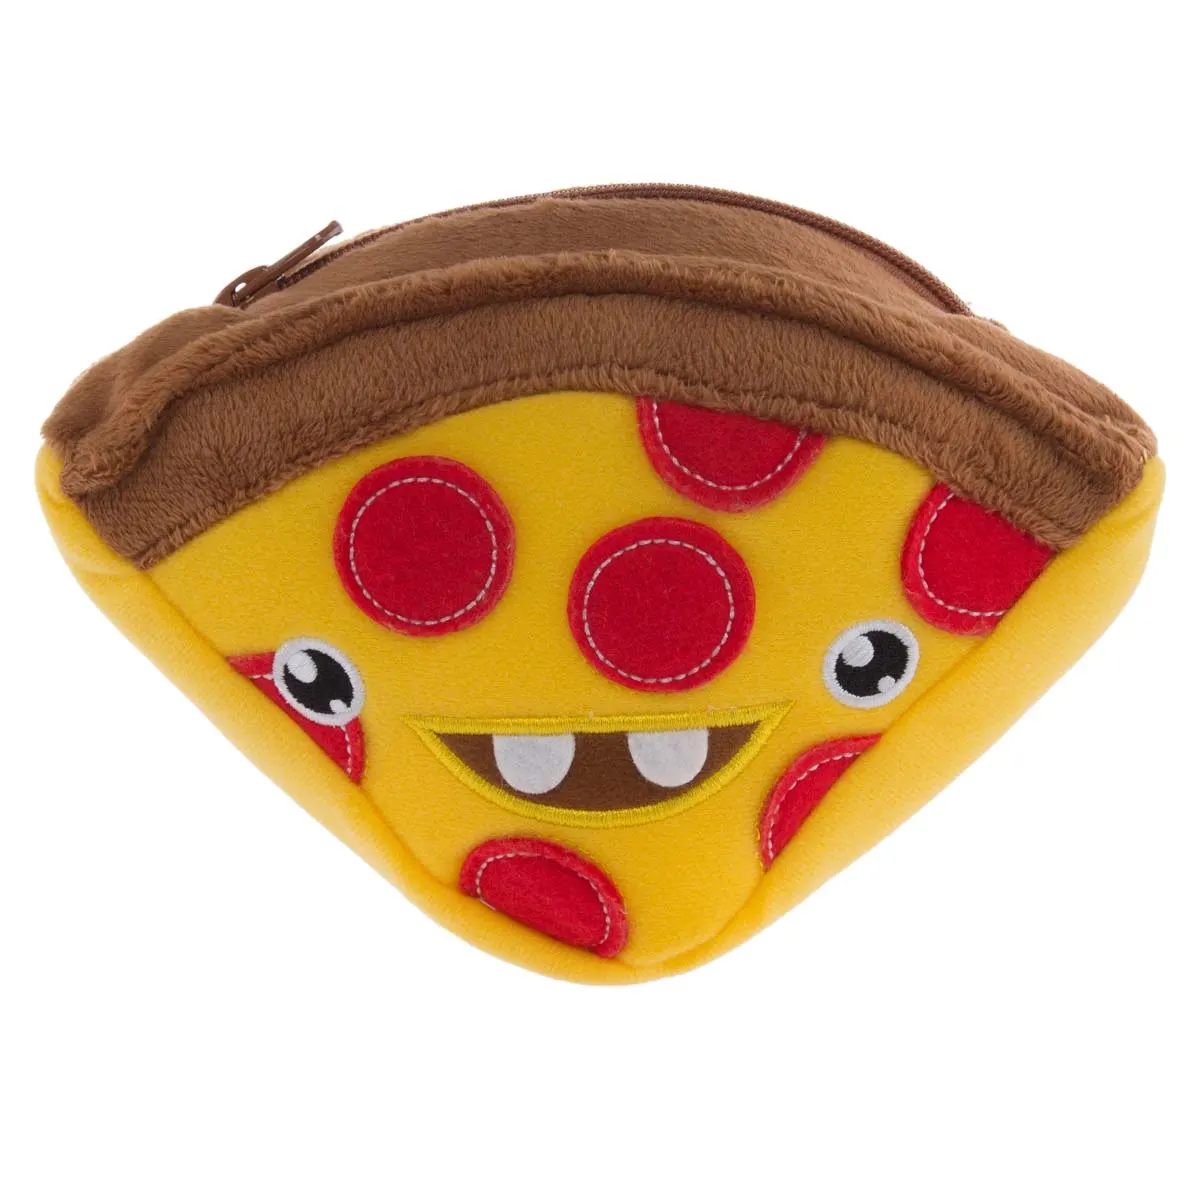 NEW Hallmark ZipZips Plush Pizza Carry Case Bag Handheld Tote 7 x 5 x 2.... - $9.95